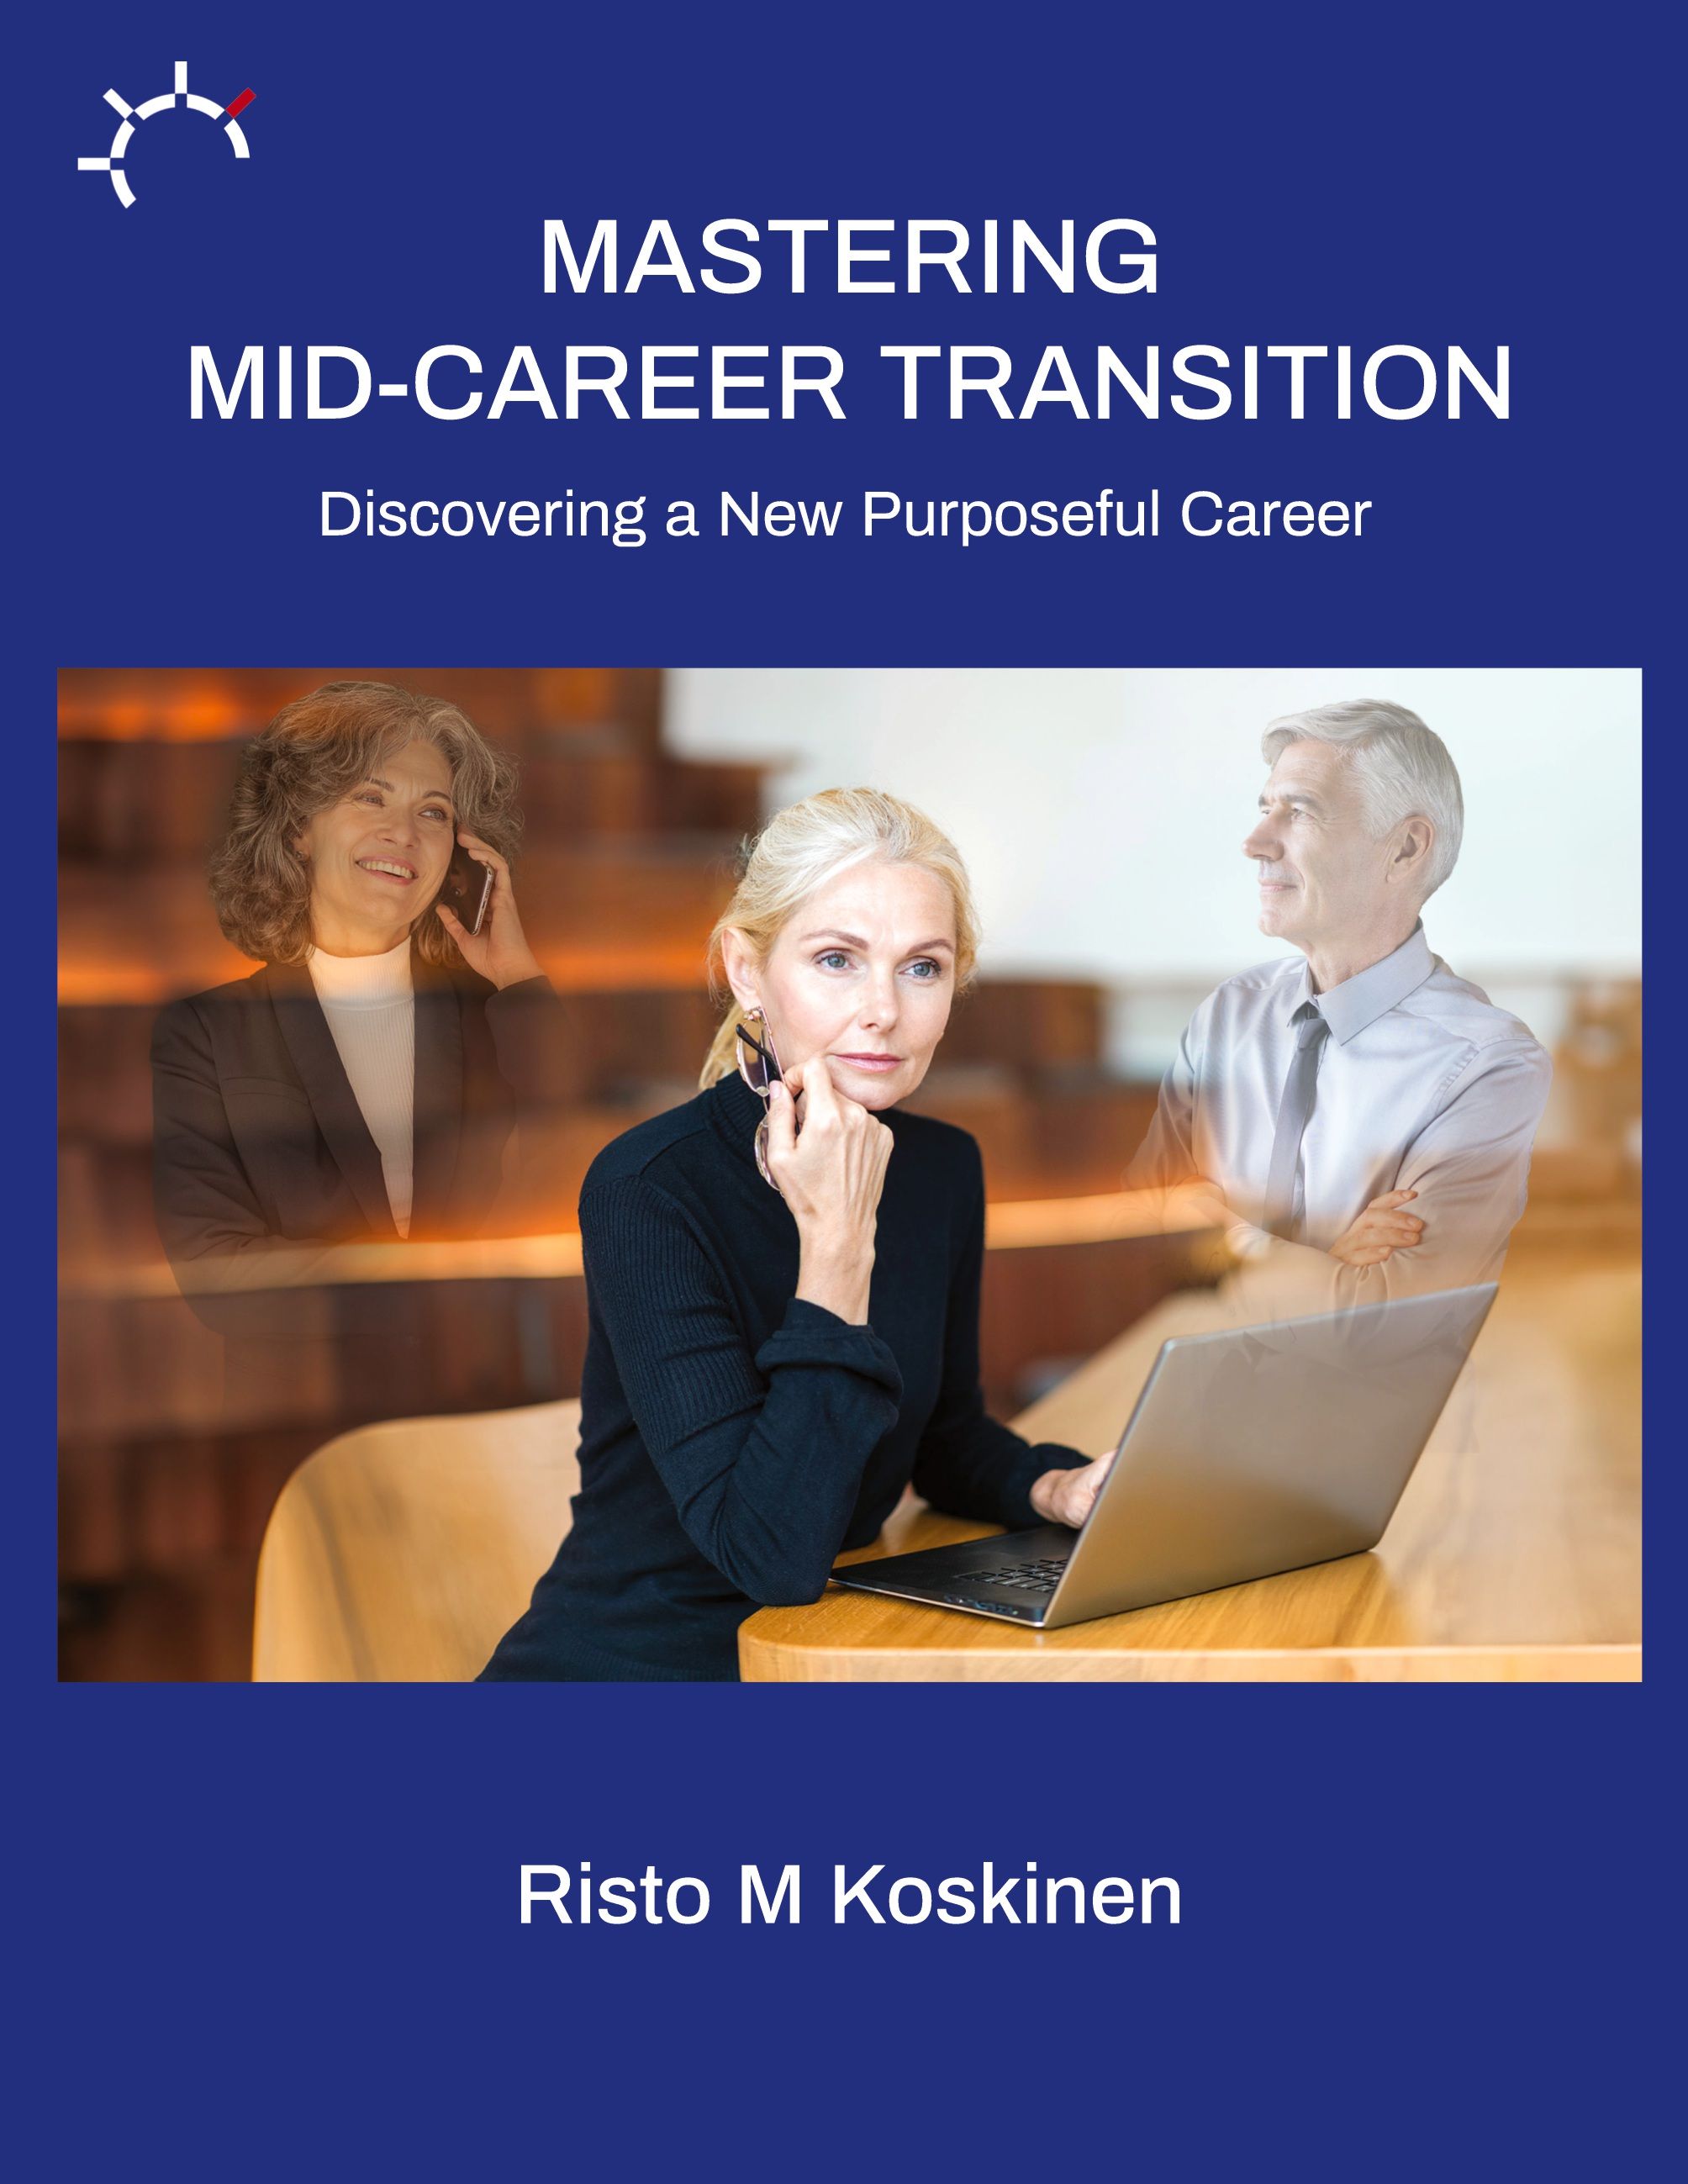 Risto M Koskinen : Mastering mid-career transition